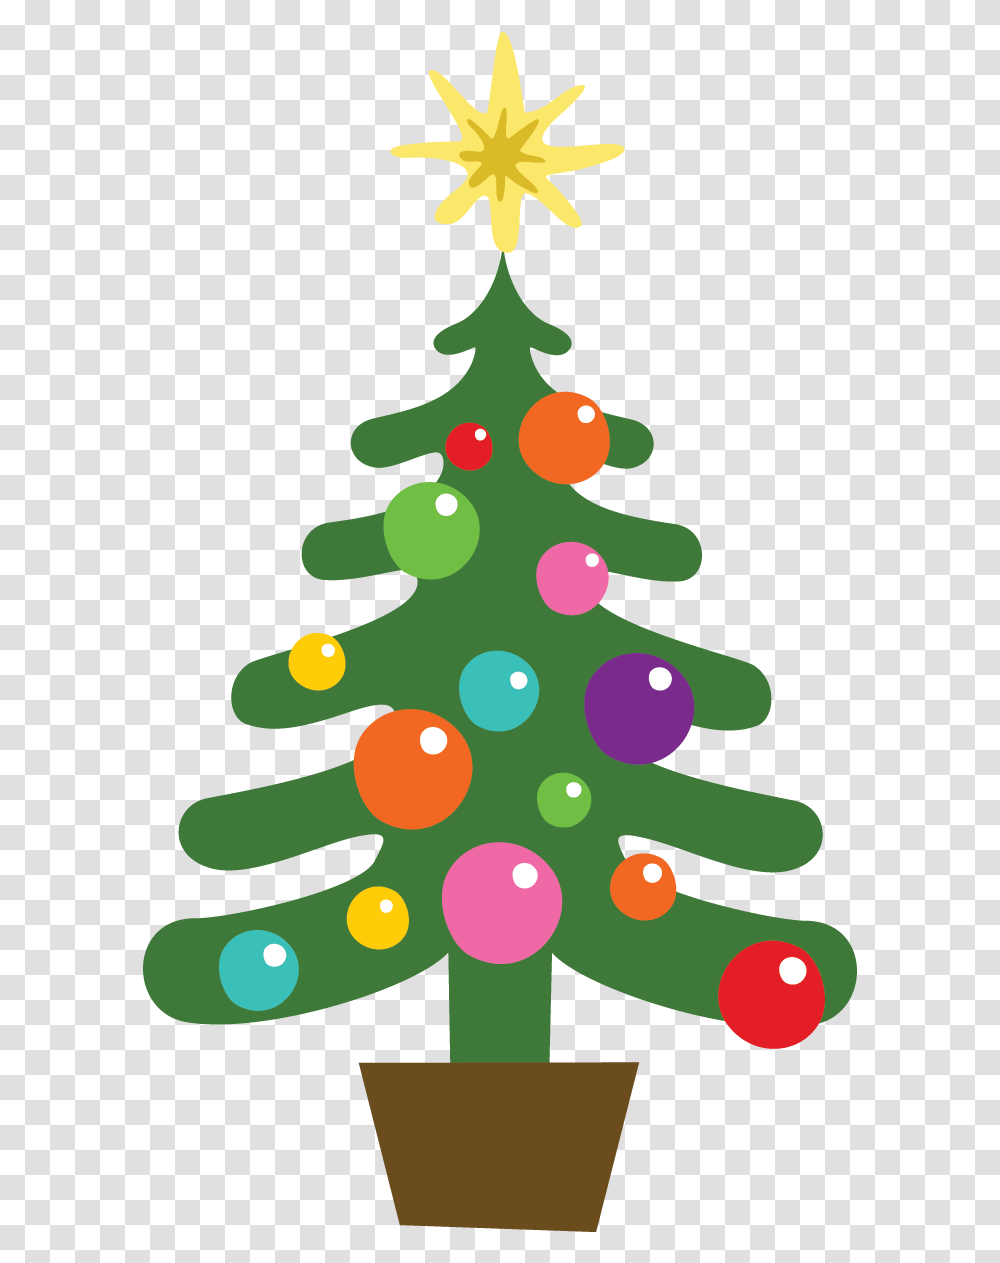 December Holidays Tree Clip Art Image Clipartix Christmas Holiday Clip Art, Plant, Ornament, Christmas Tree, Star Symbol Transparent Png